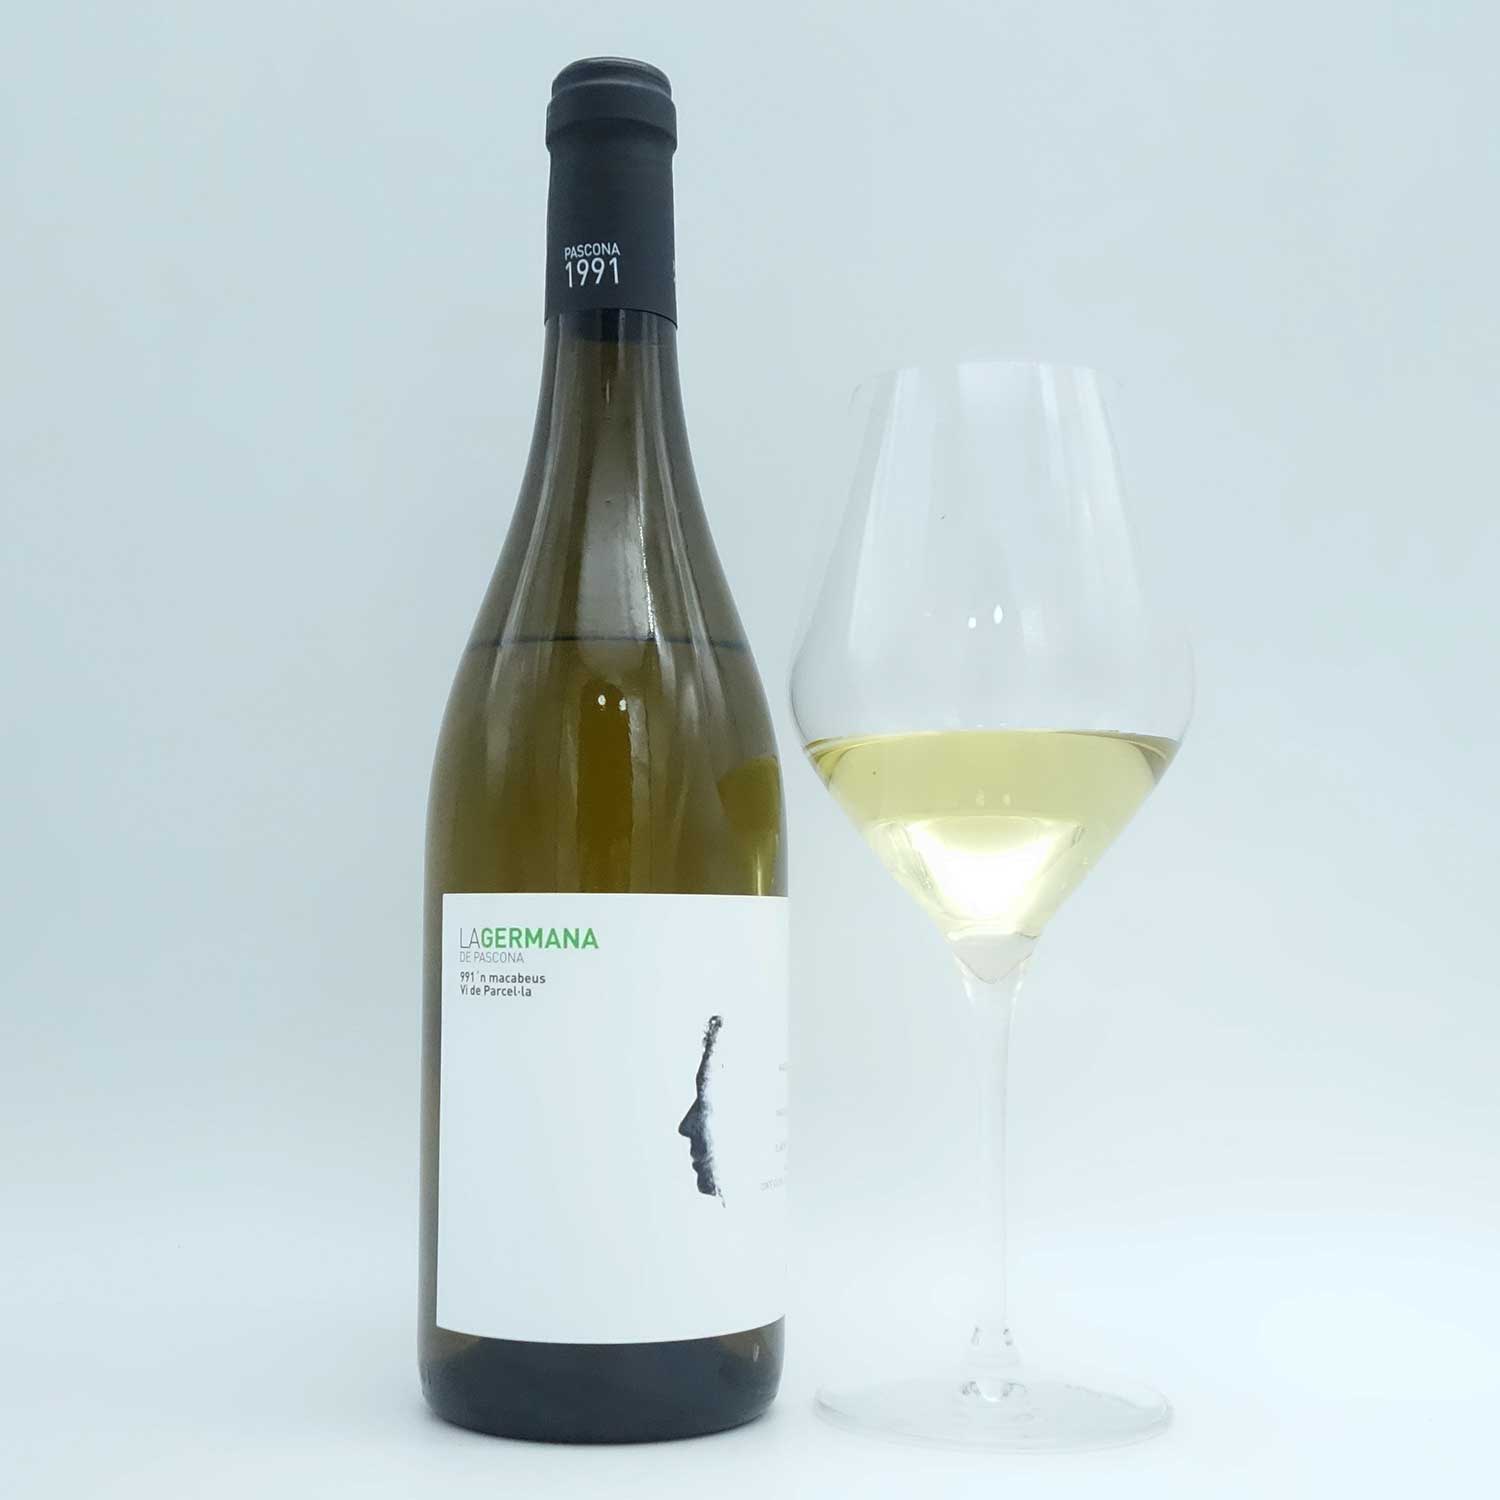 La Germana vi blanc Celler Pascona Falset 05